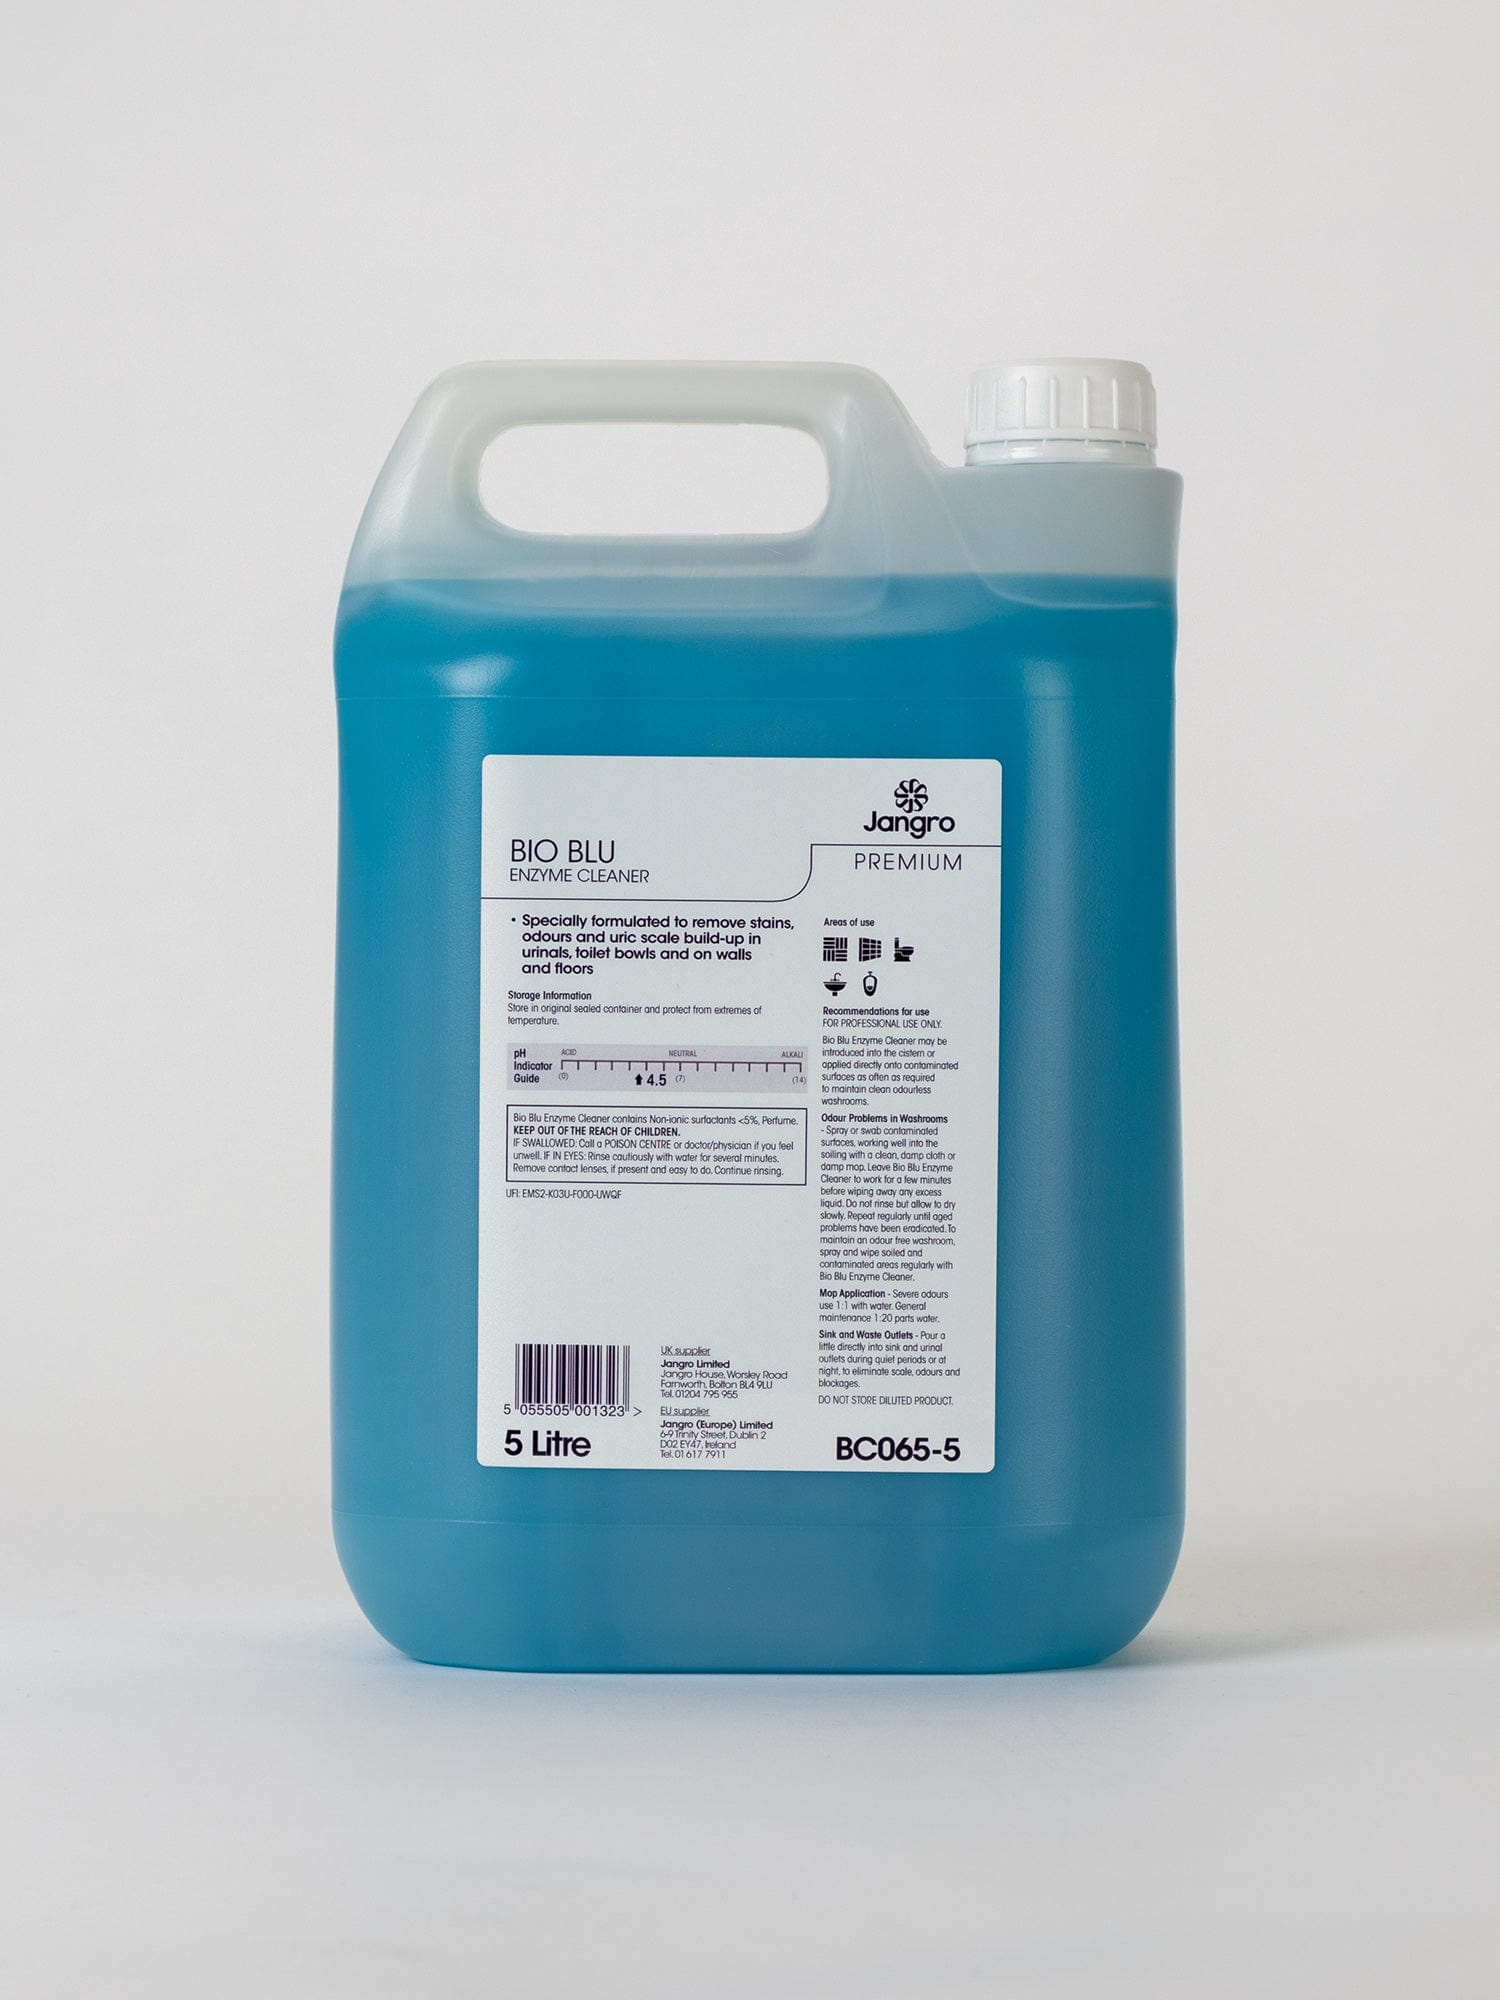 blu away bio blue enzyme cleaner